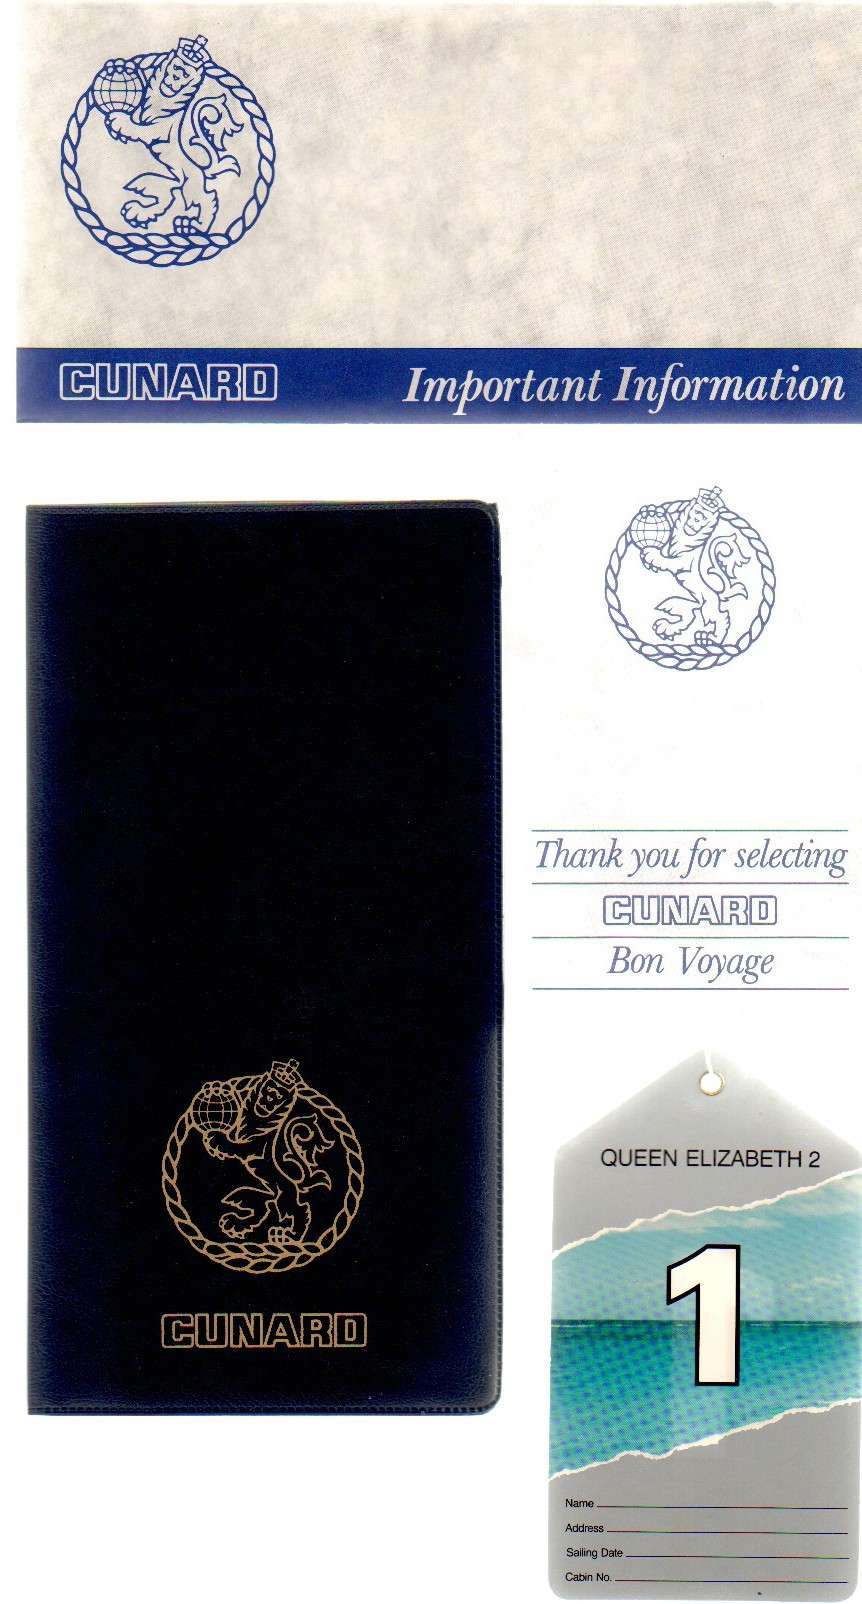 Cunard QE2 Memorabilia Collection. Folder containing QE2 memorabilia including schedules, stationary